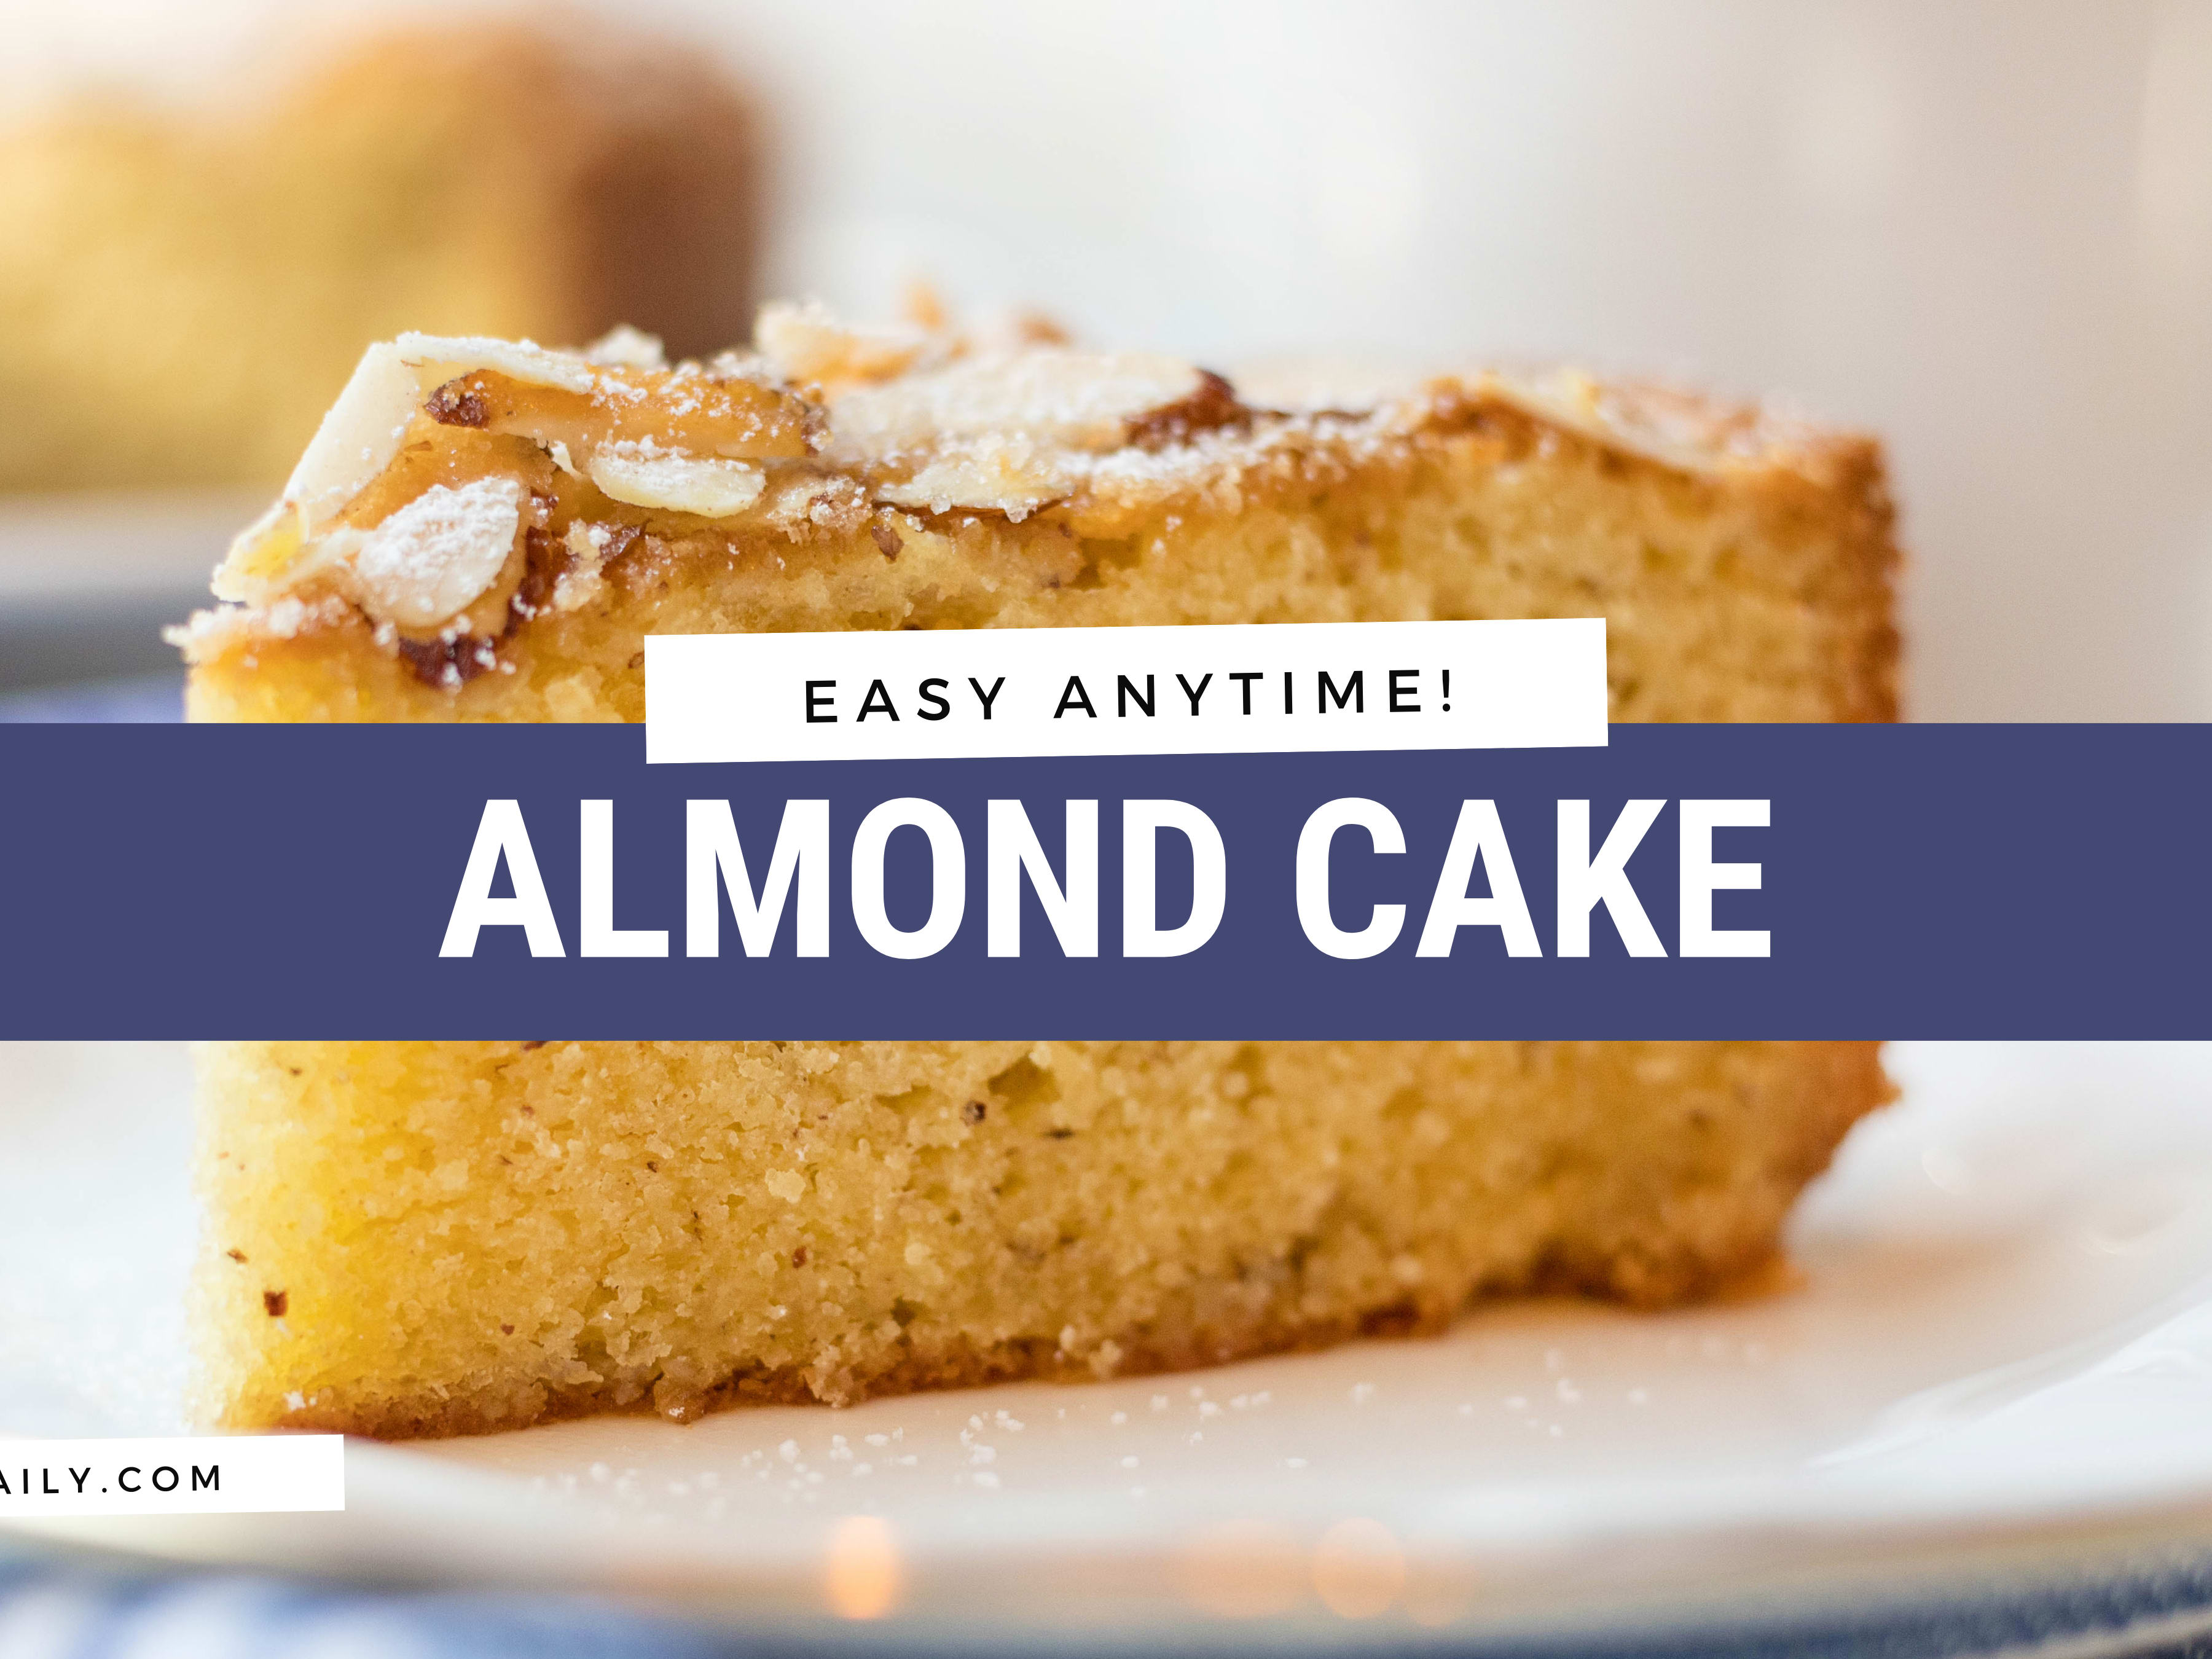 Solo Gluten-Free Almond Paste, Baking Mix Box 8 oz - Walmart.com